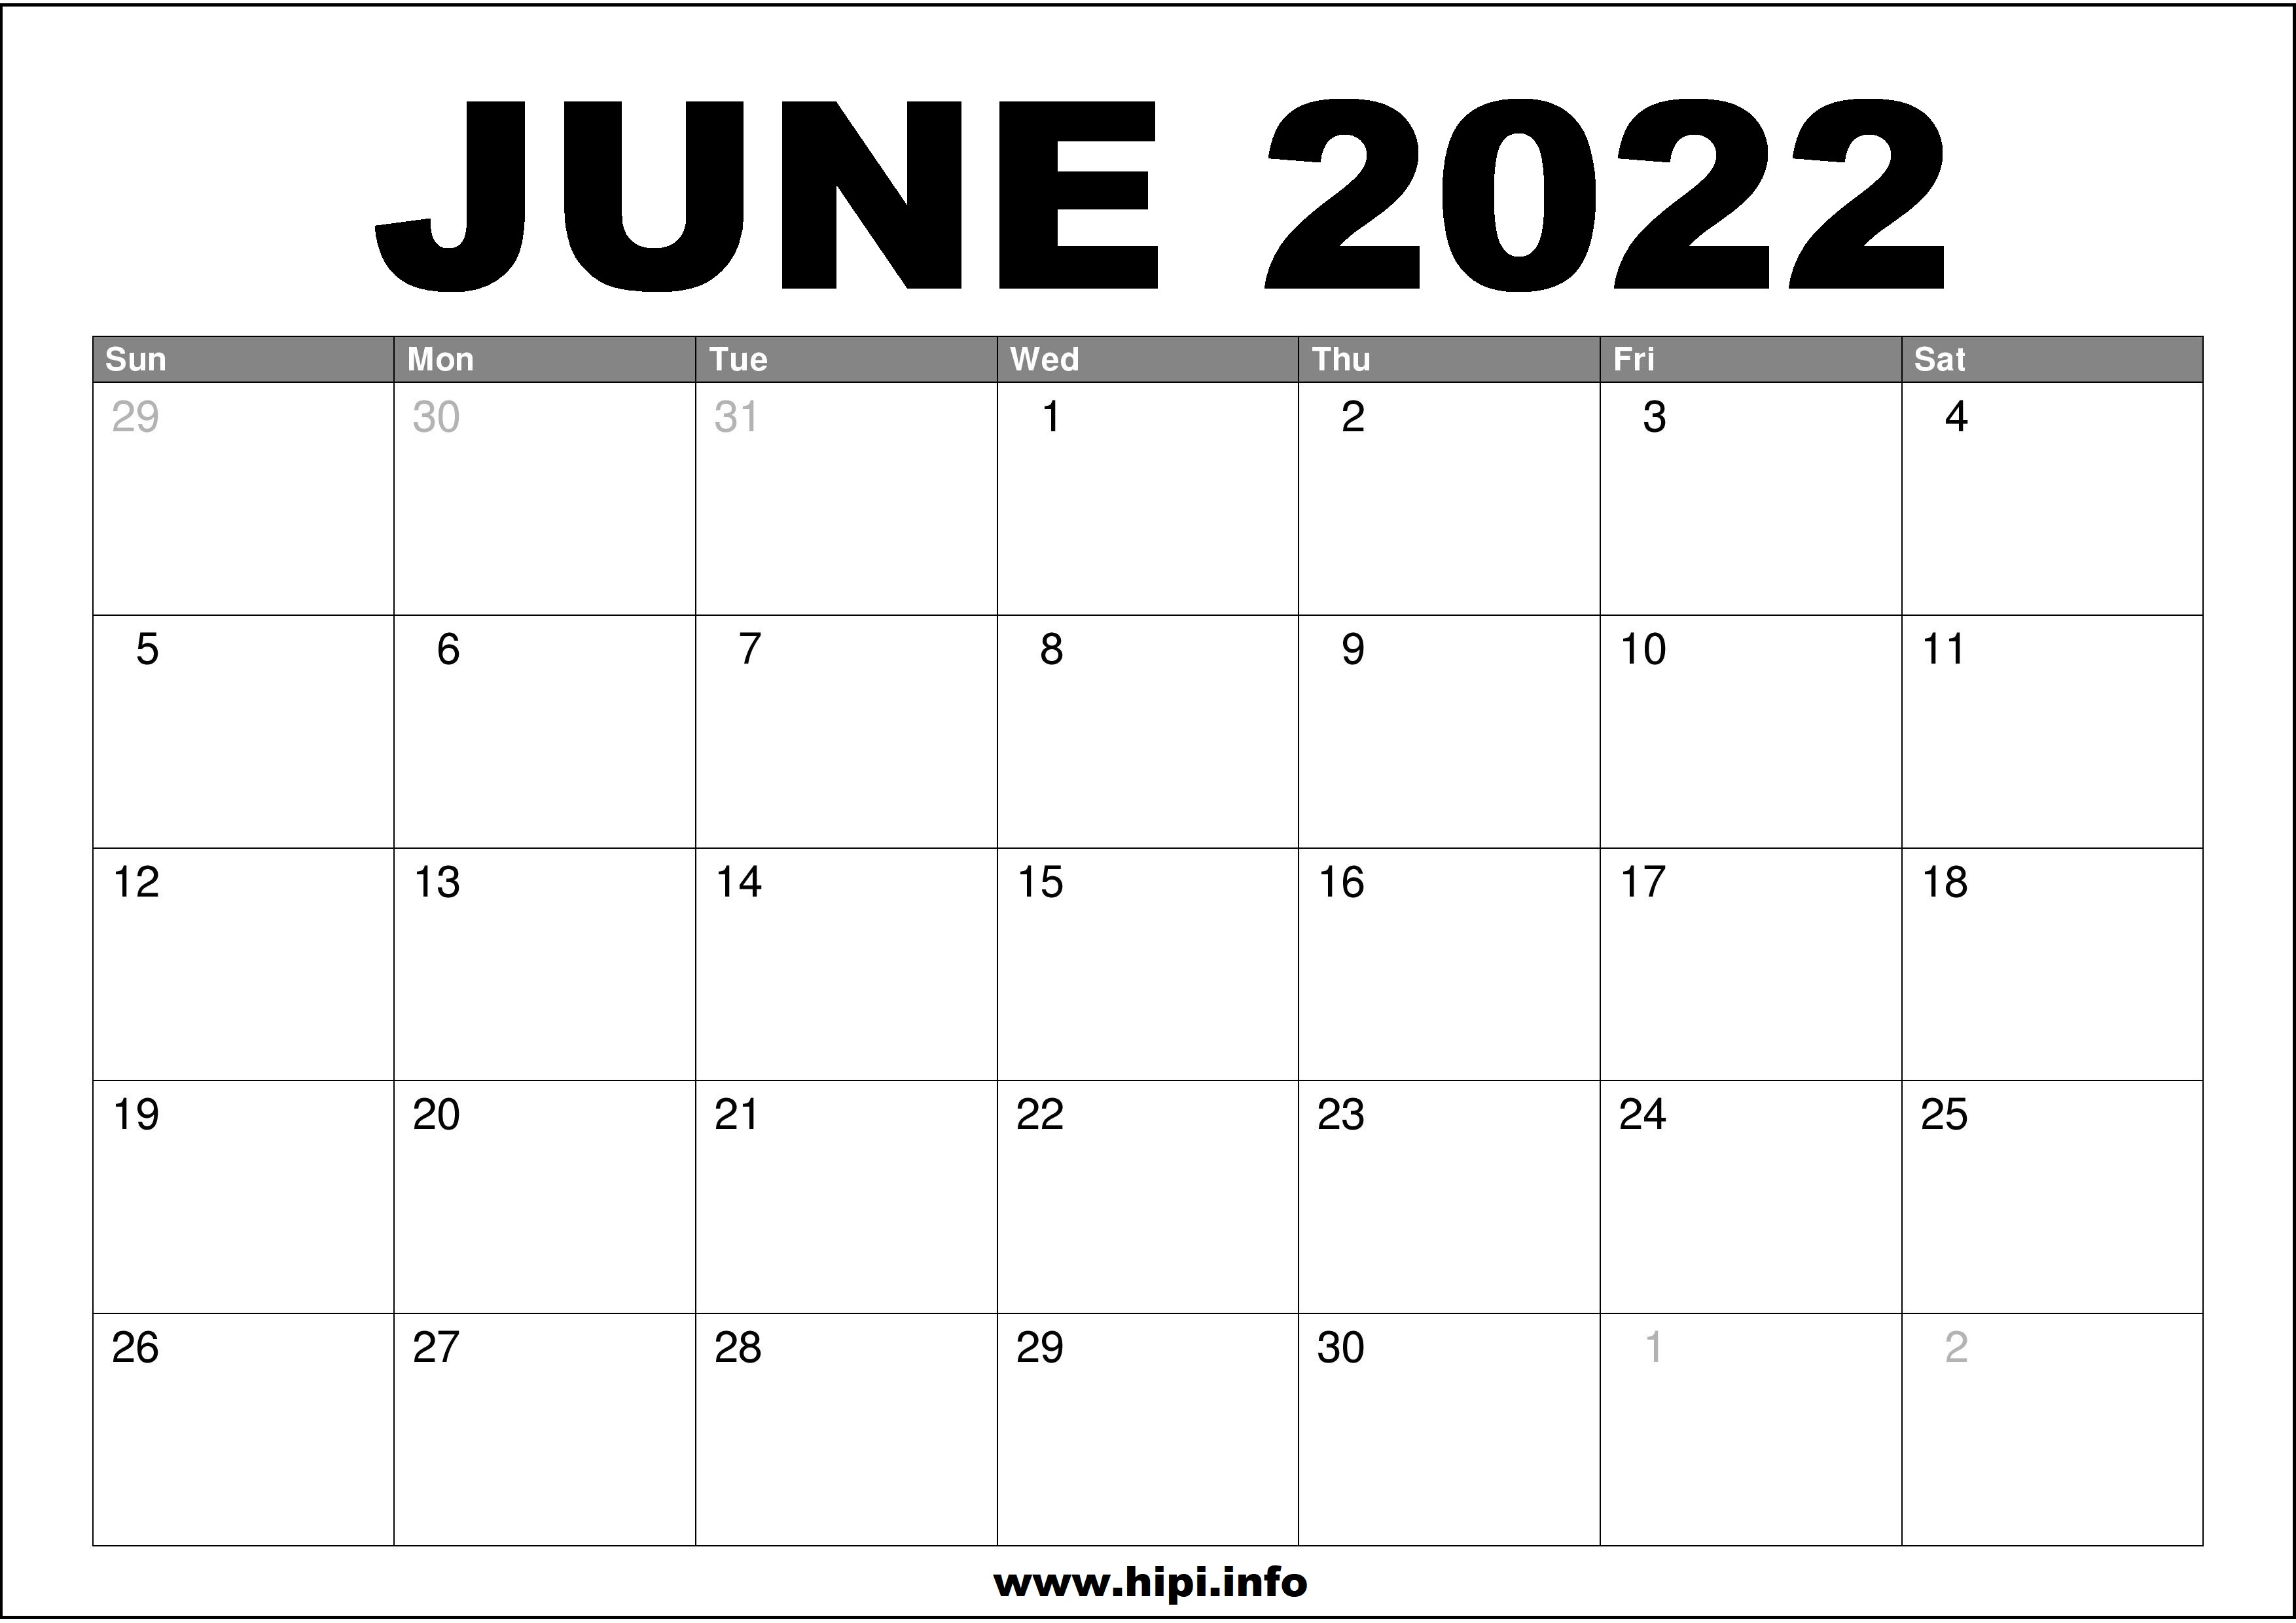 Monthly Calendar June 2022 June 2022 Calendar Printable Free - Hipi.info | Calendars Printable Free